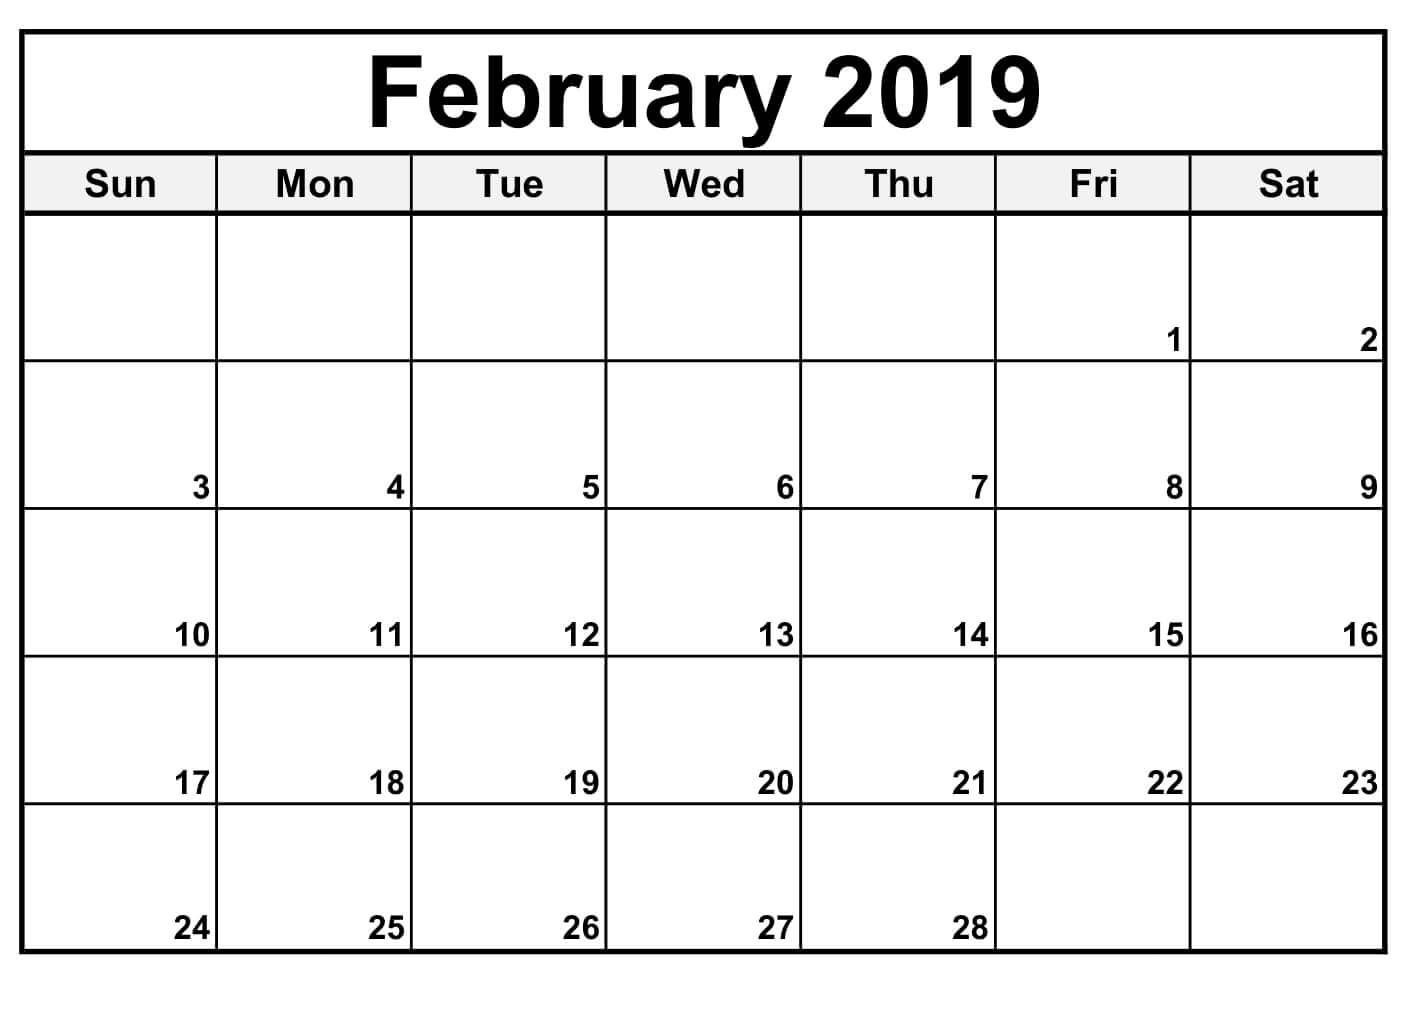 February 2019 Calendar Editable (With Images) | Blank